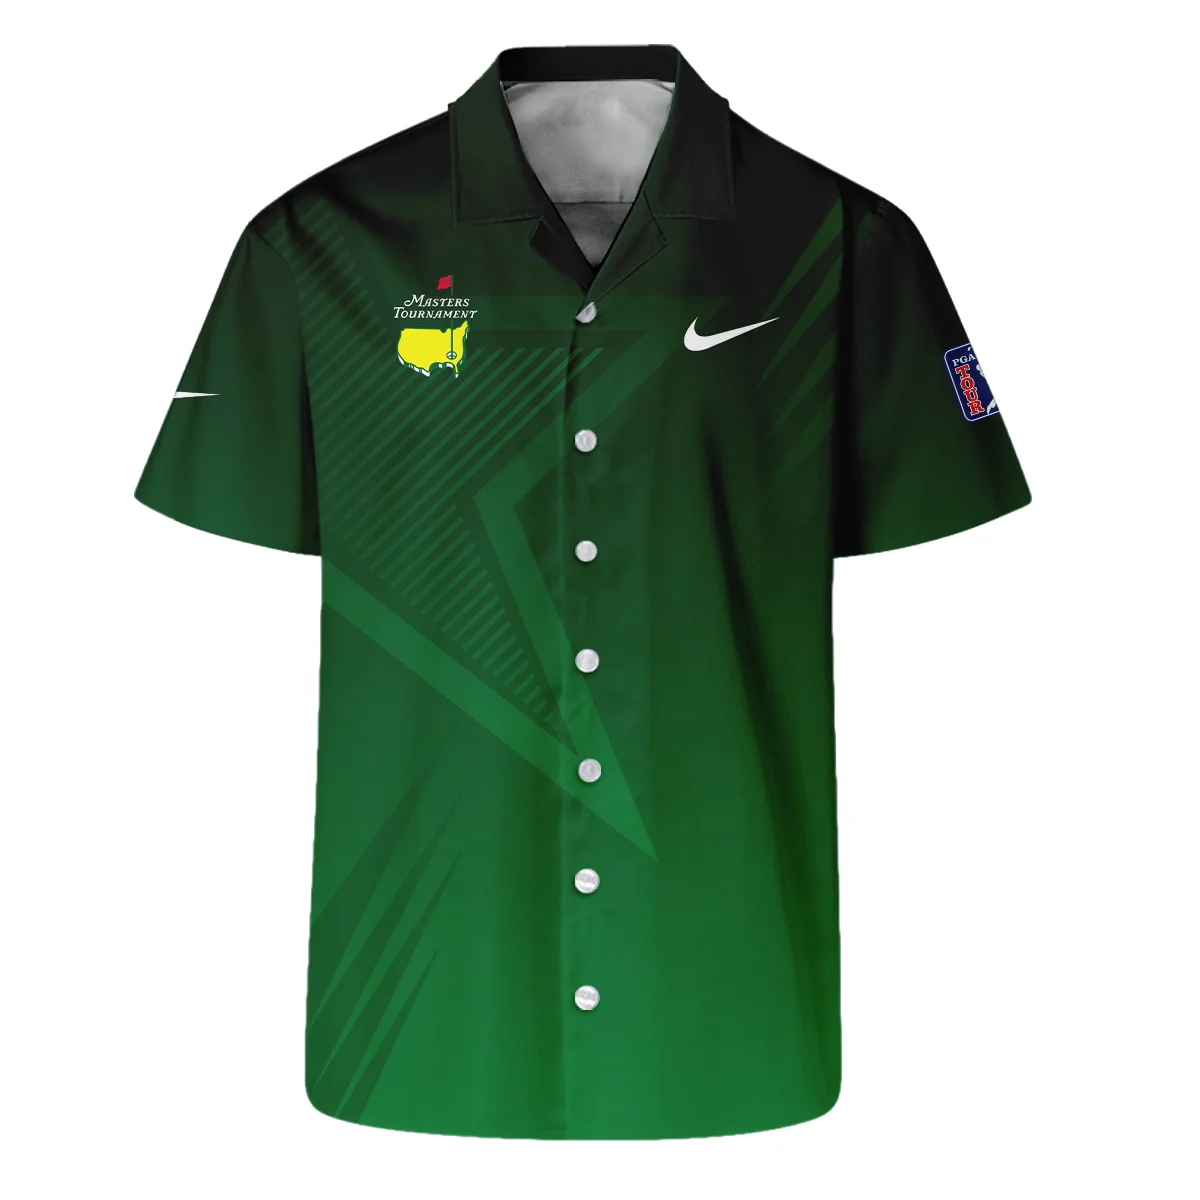 Nike Masters Tournament Polo Shirt Dark Green Gradient Star Pattern Golf Sports Style Classic, Short Sleeve Polo Shirts Quarter-Zip Casual Slim Fit Mock Neck Basic